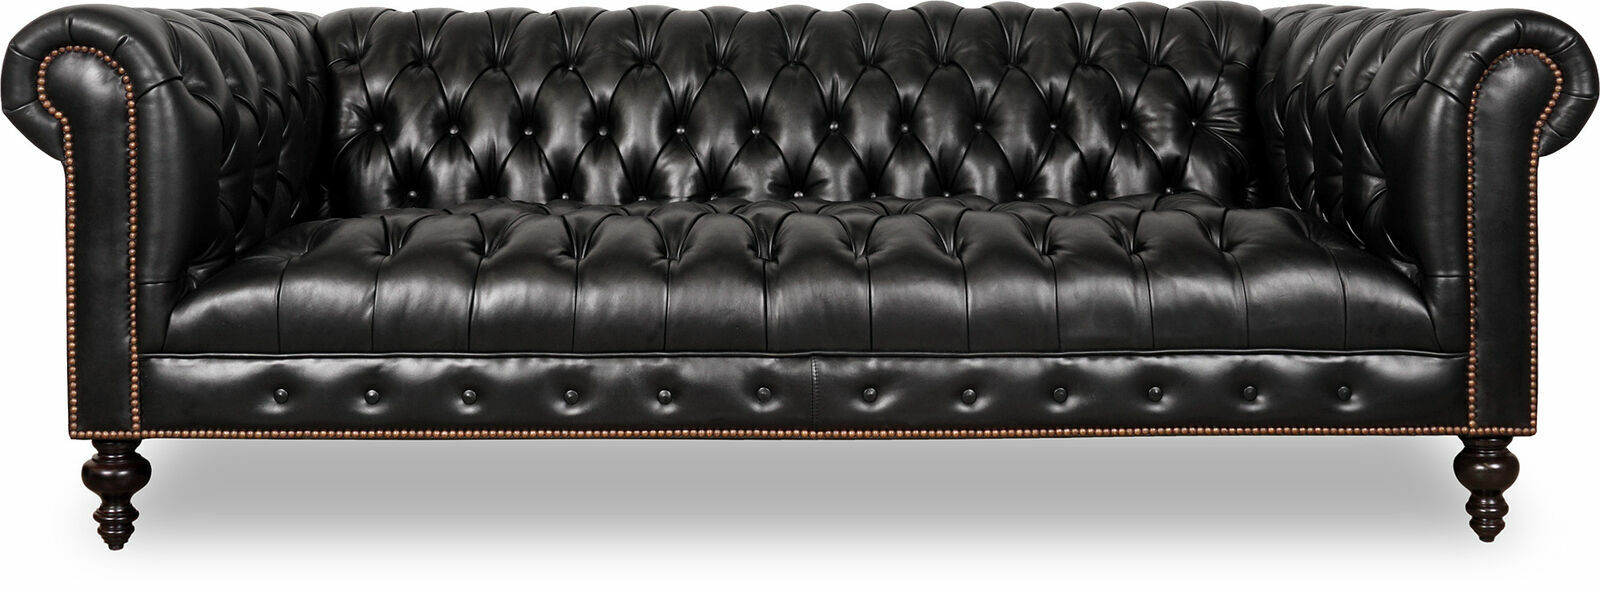 Hochwertige Leder Sofa Textil Stoff Chesterfield Couch England schwarz Sofas Neu